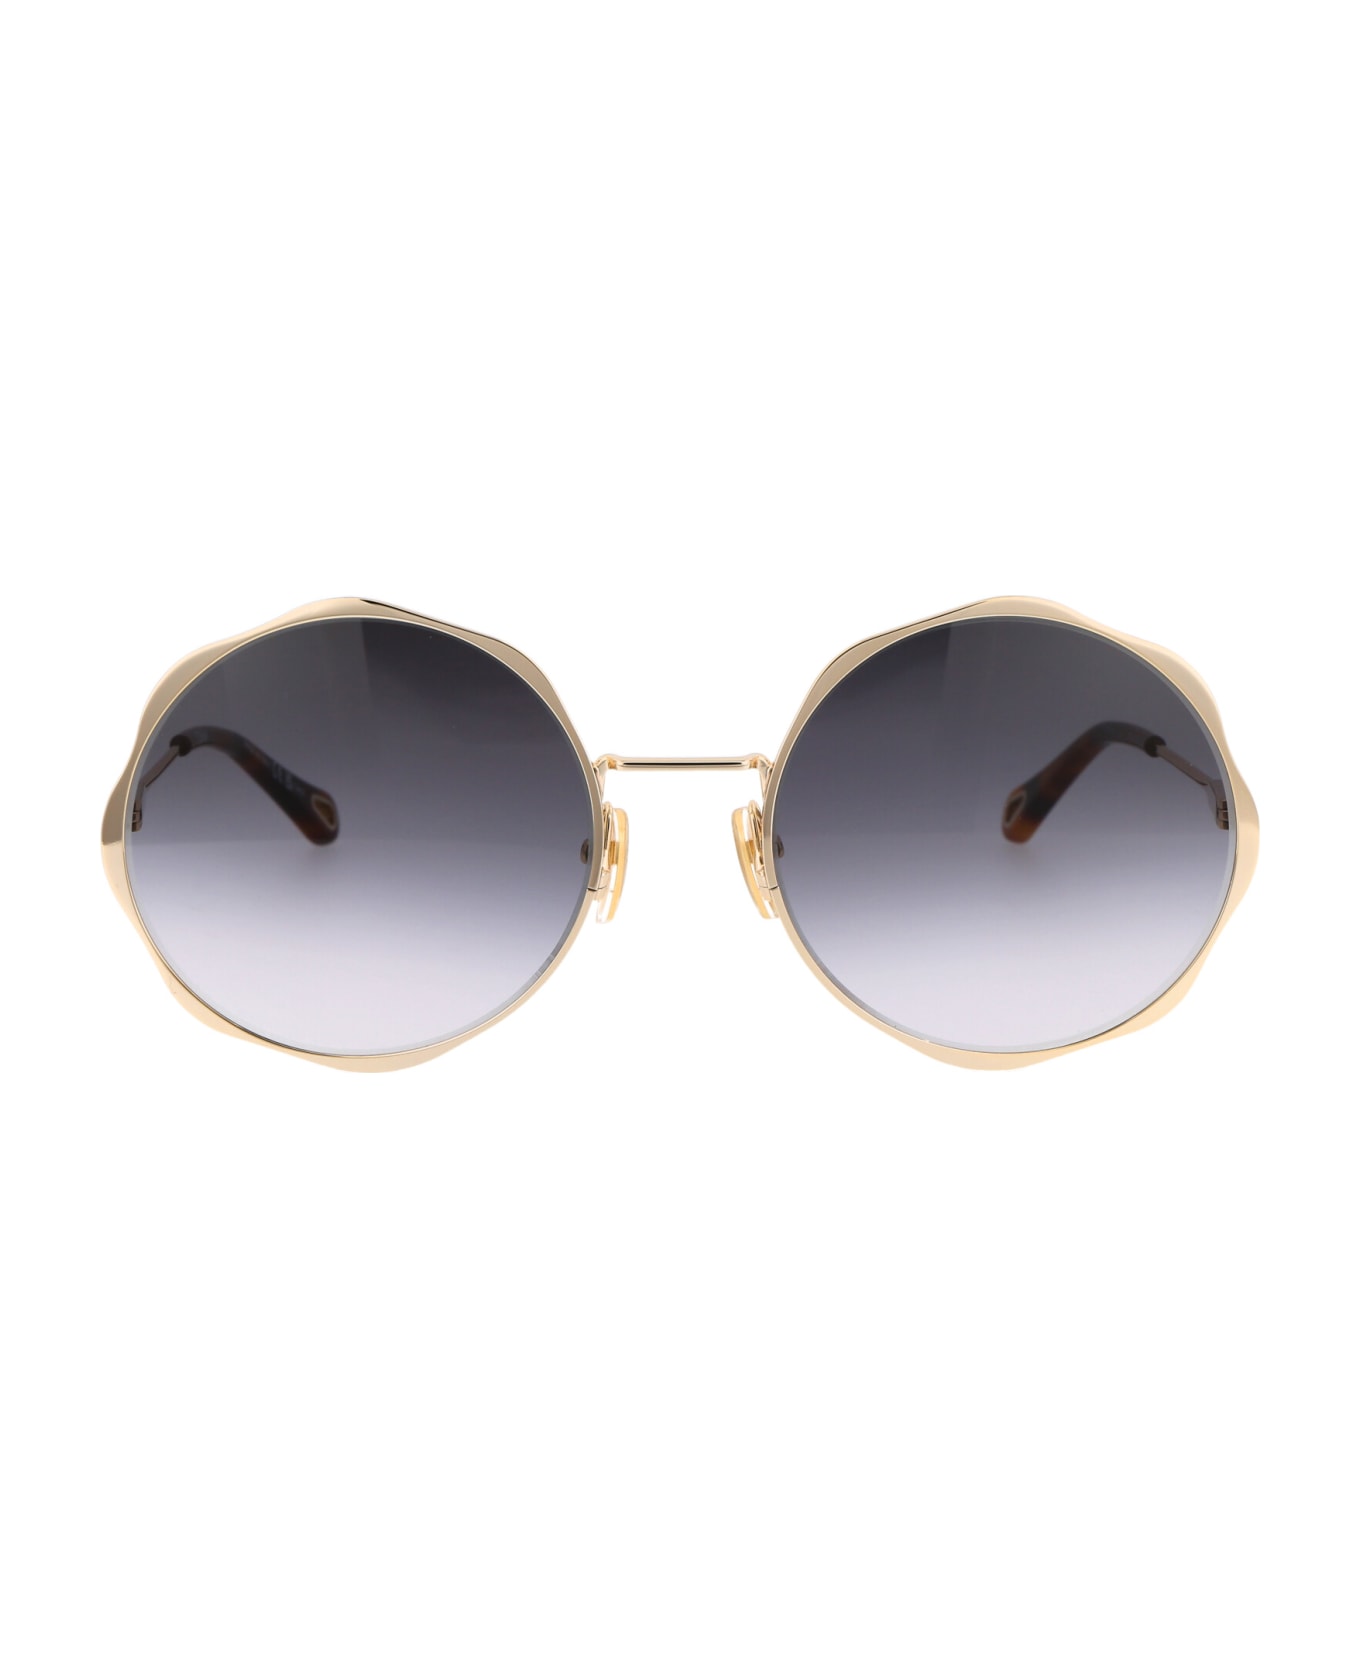 Chloé Eyewear Ch0184s Sunglasses - 001 GOLD GOLD GREY